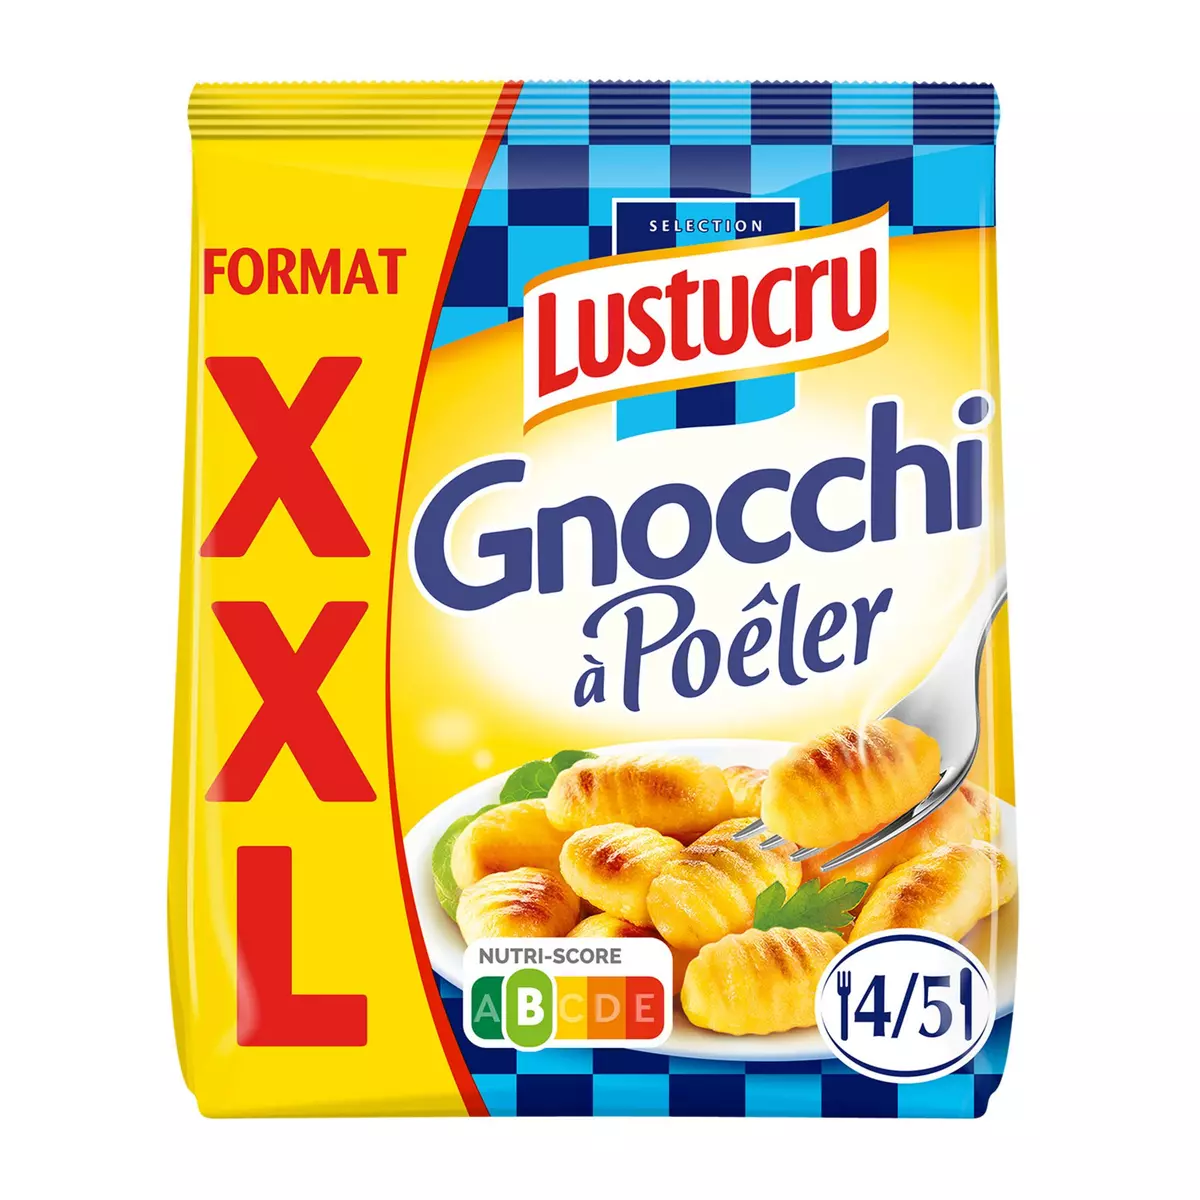 LUSTUCRU Gnocchi à poêler nature Format XXL 4 portions 715g